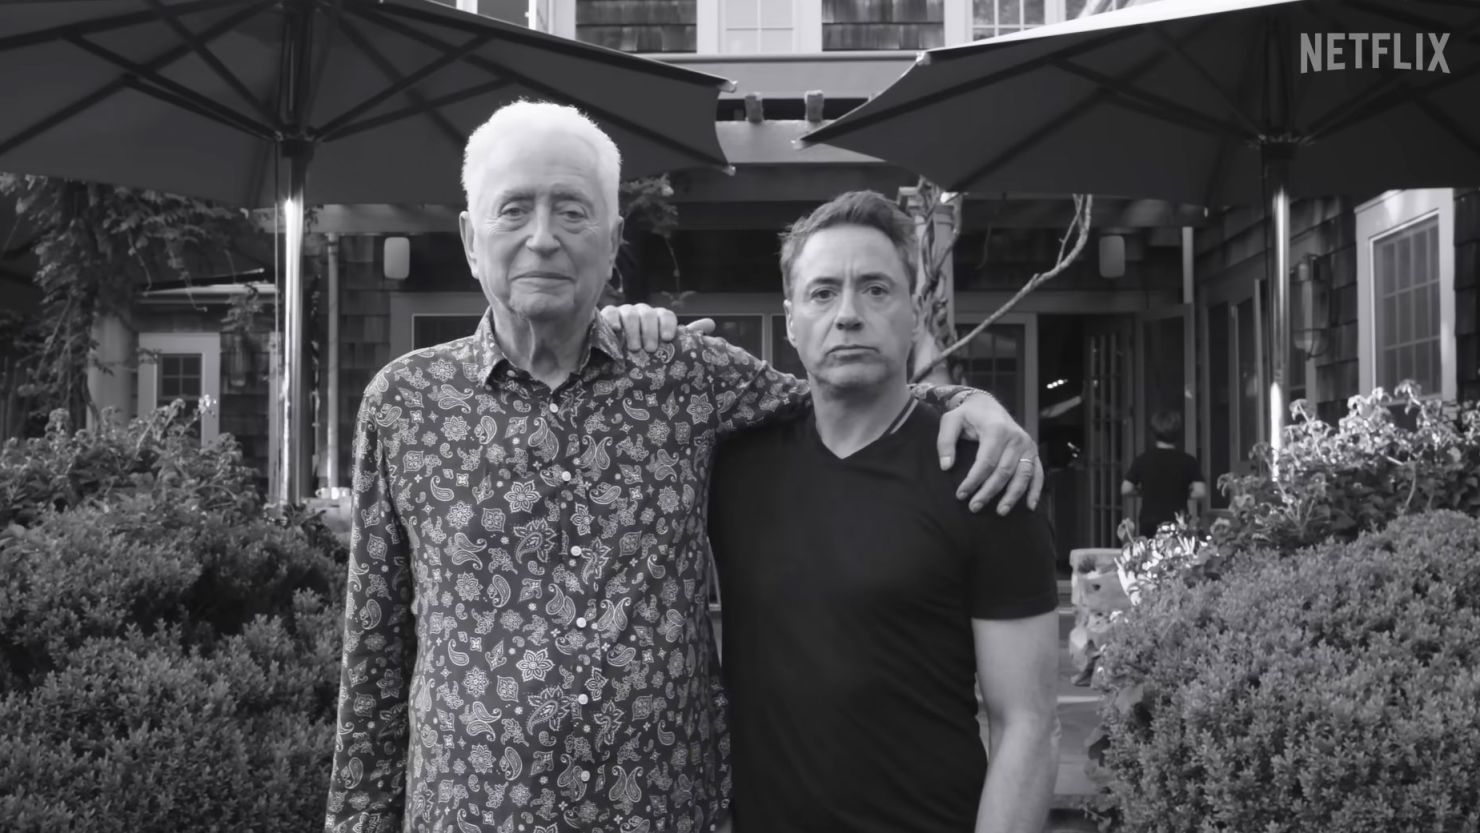 Robert Downey Sr. and Robert Downey Jr. in the Netflix documentary "Sr."